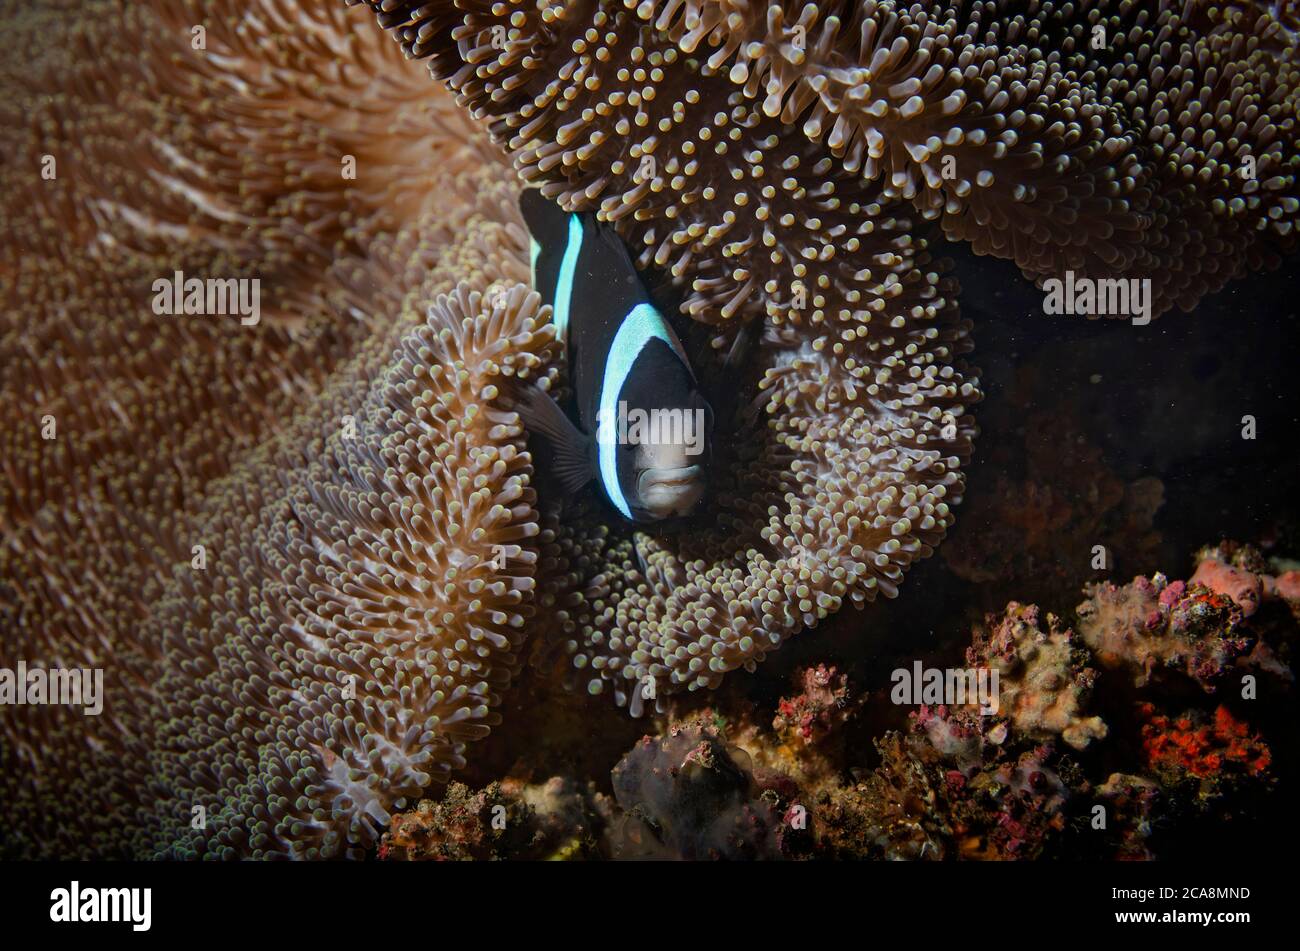 Clark's Anemonefish, Amphiprion clarkii, on a Merten's Carpet Anemone, Stichodactyla mertensii, Tulamben, Bali Stock Photo